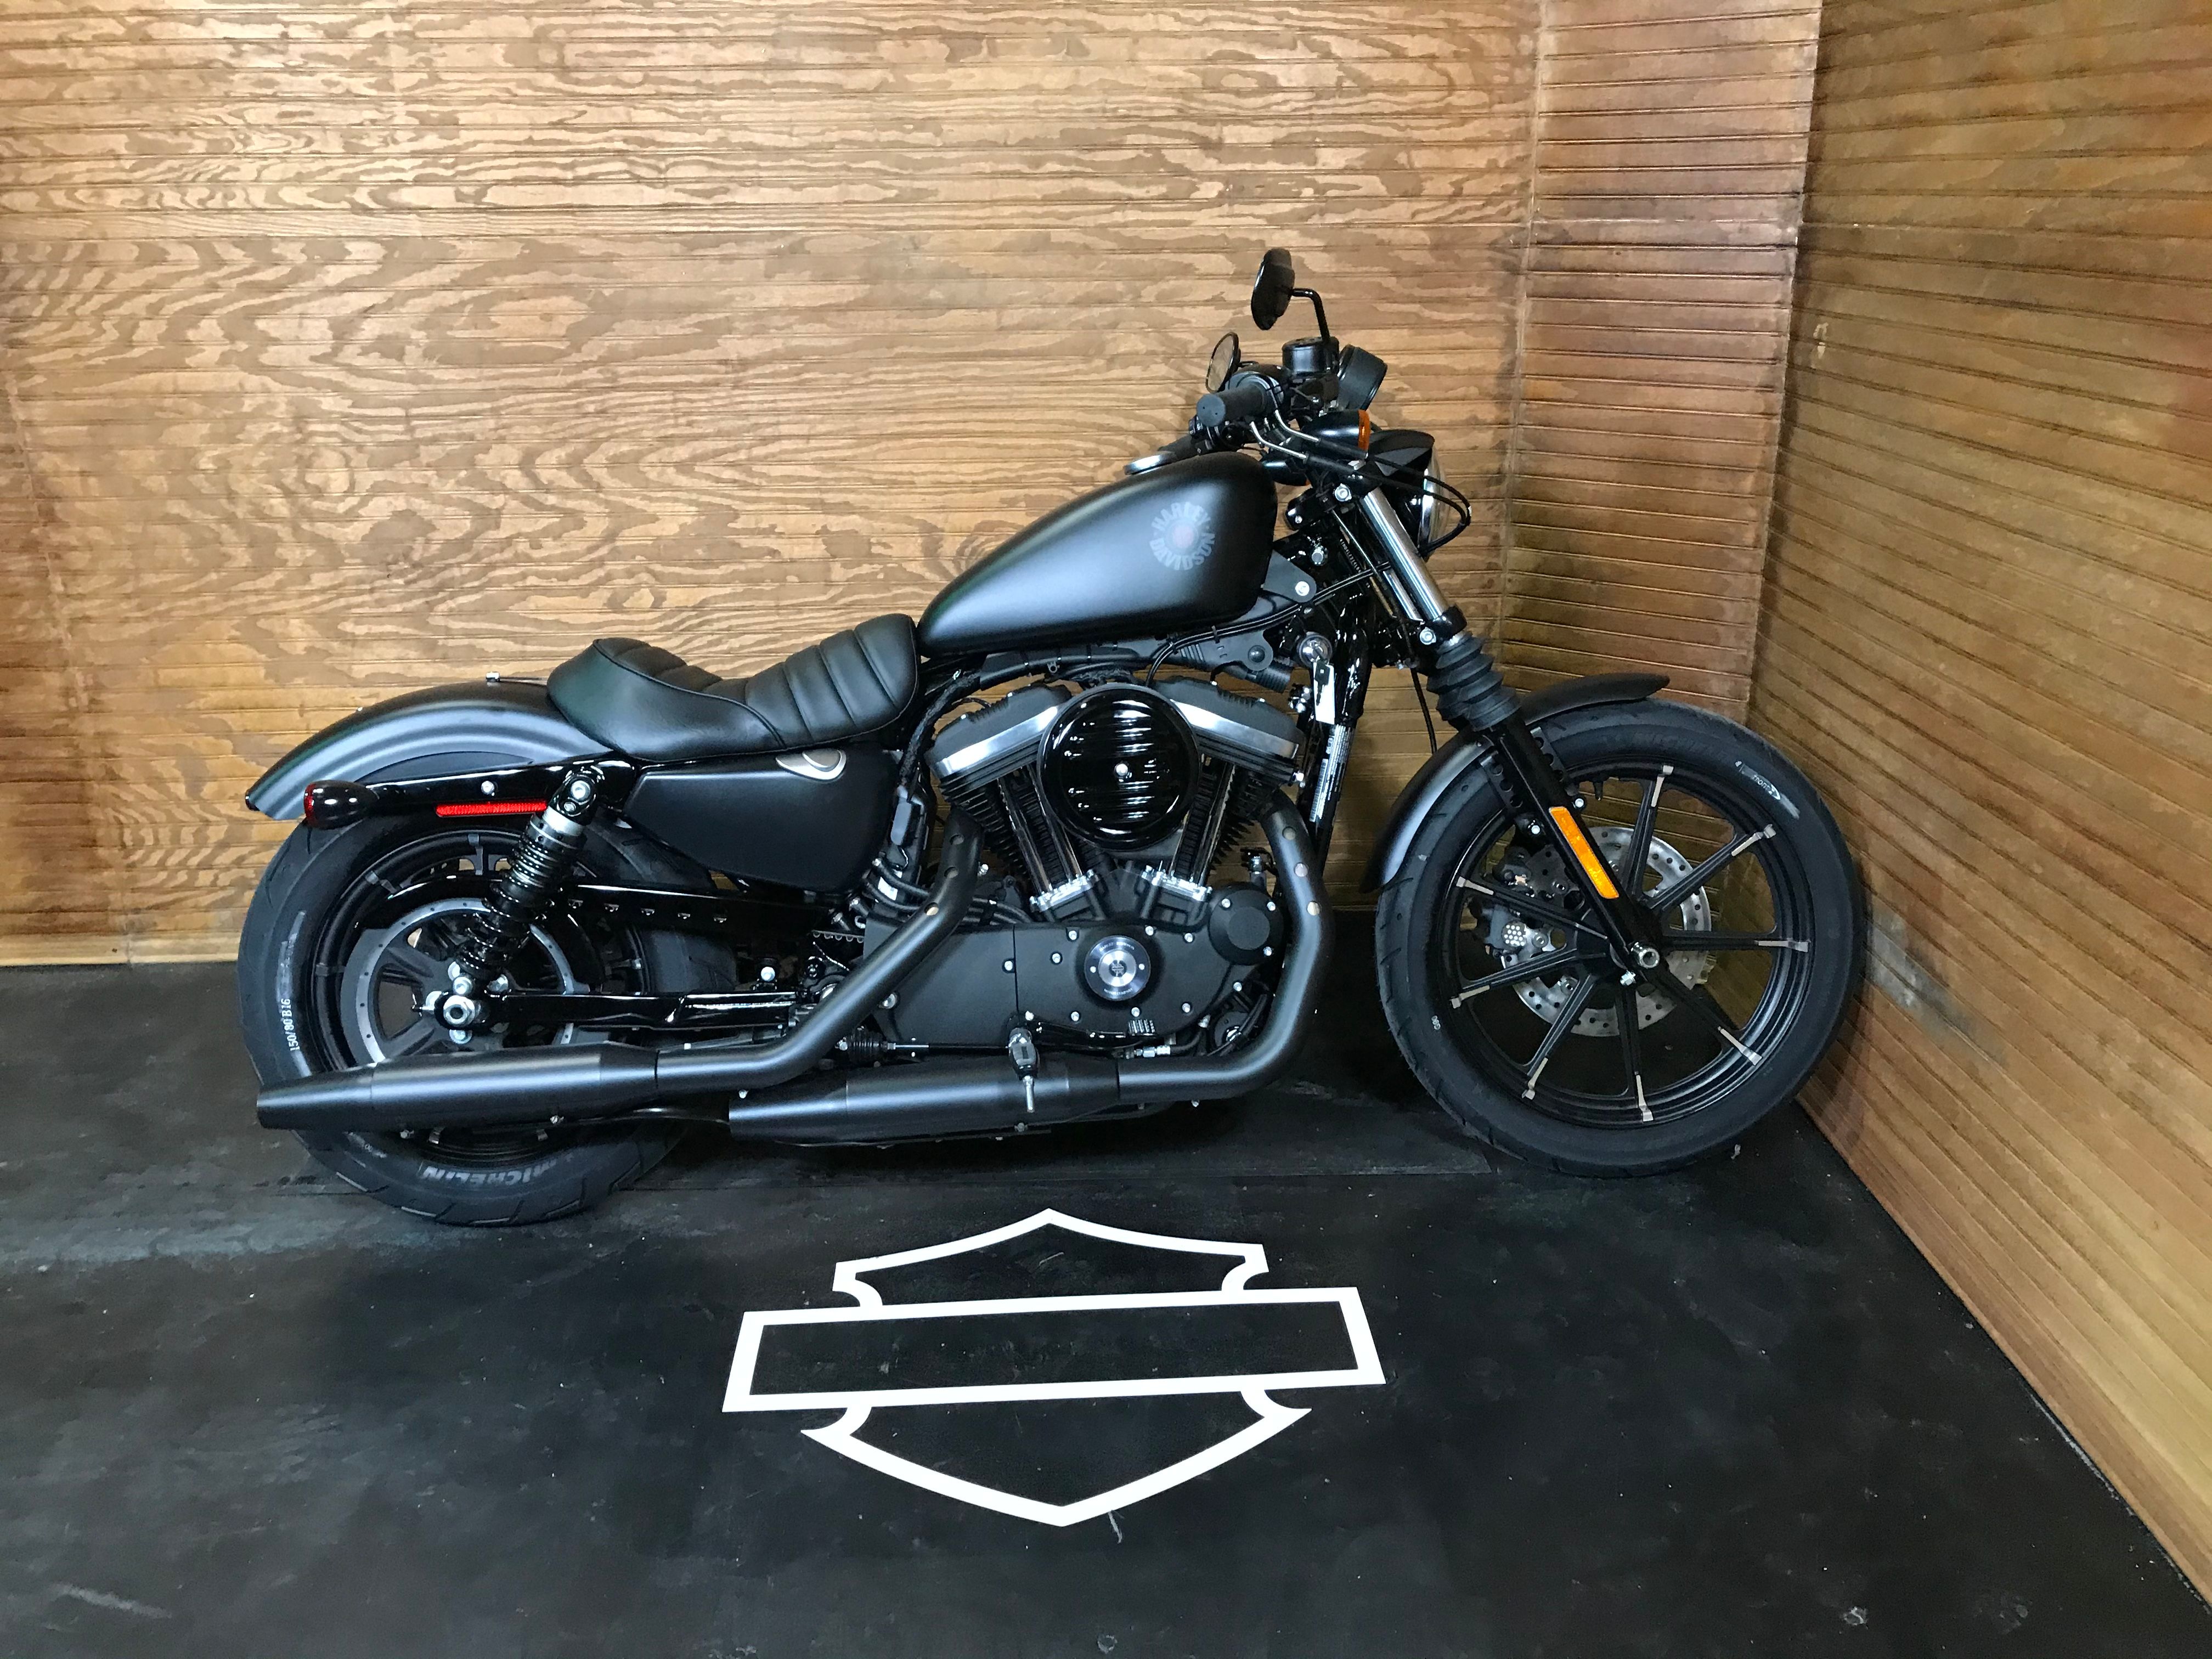 New 2020 Harley-Davidson Iron 883 in Bowling Green #429225 | Harley